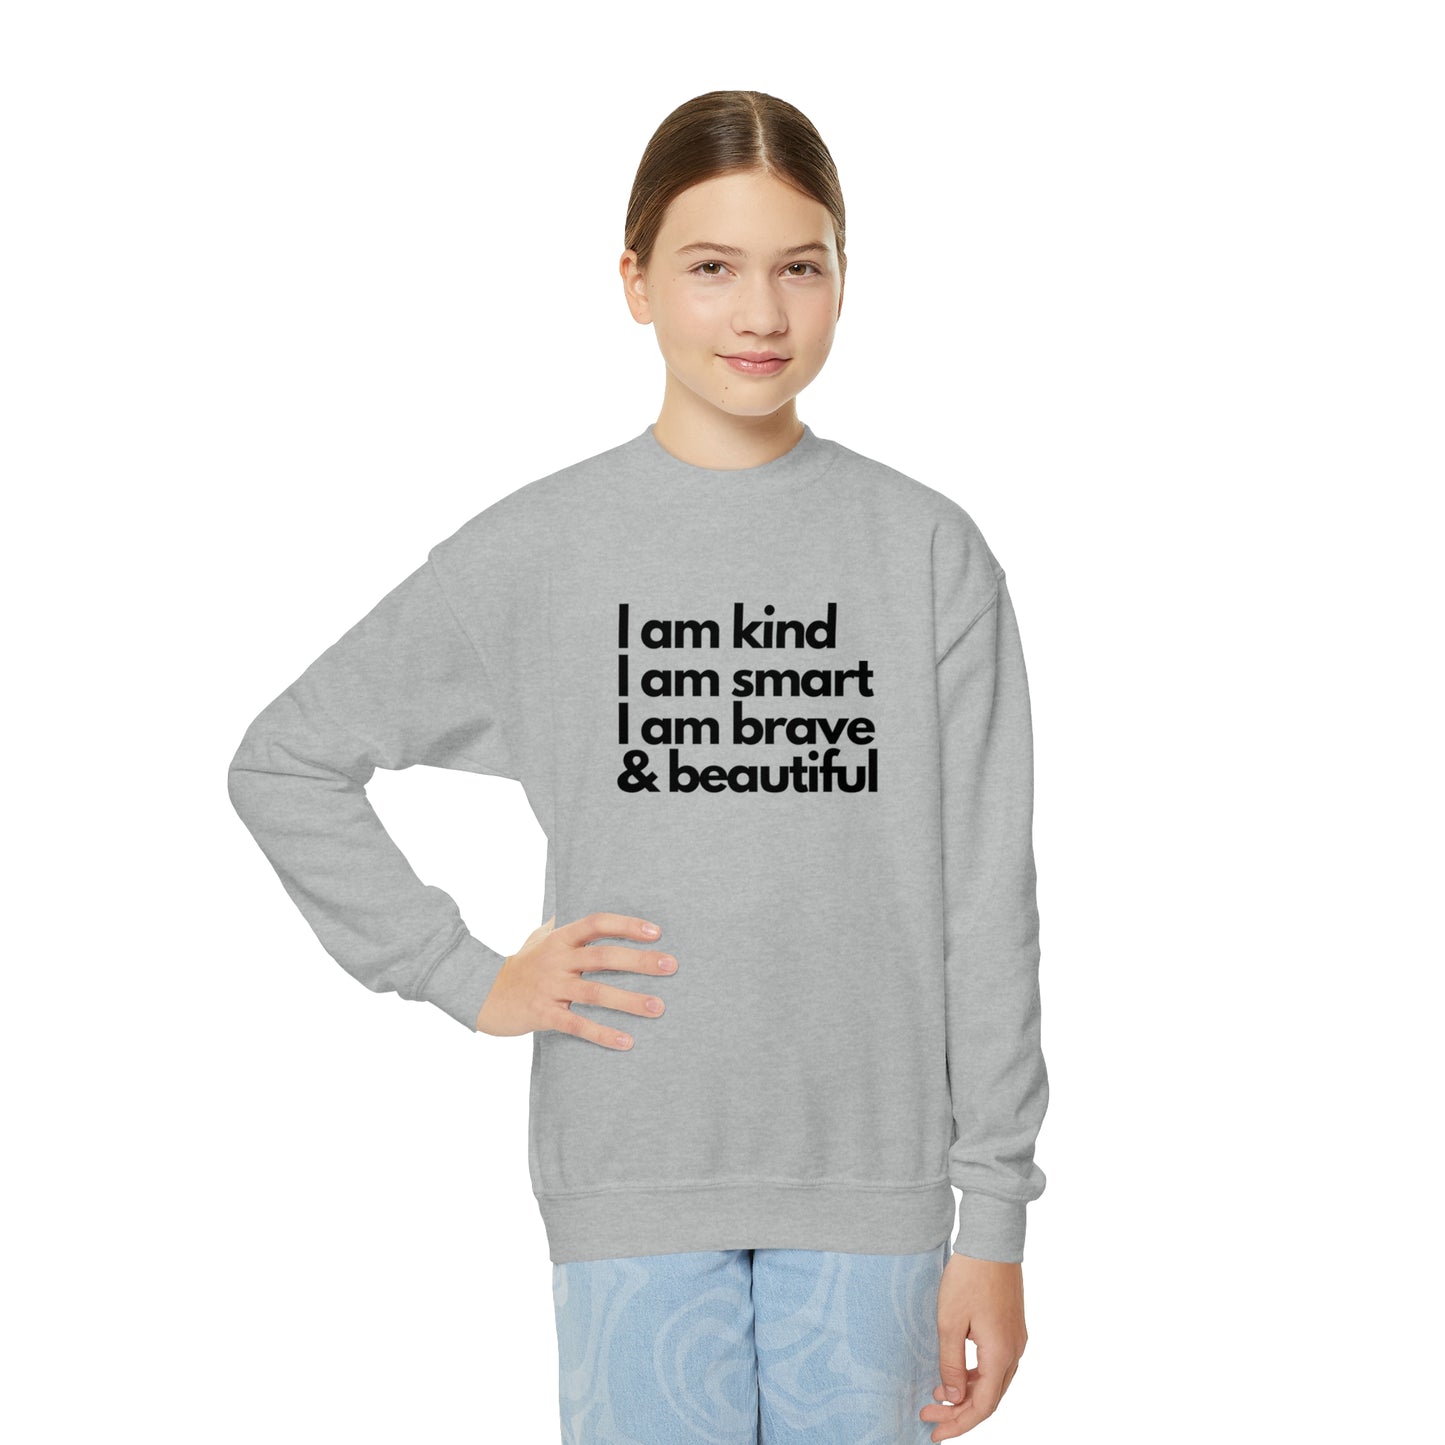 I am Kind, I am smart, I am brave & beautiful - Youth Crewneck Sweatshirt